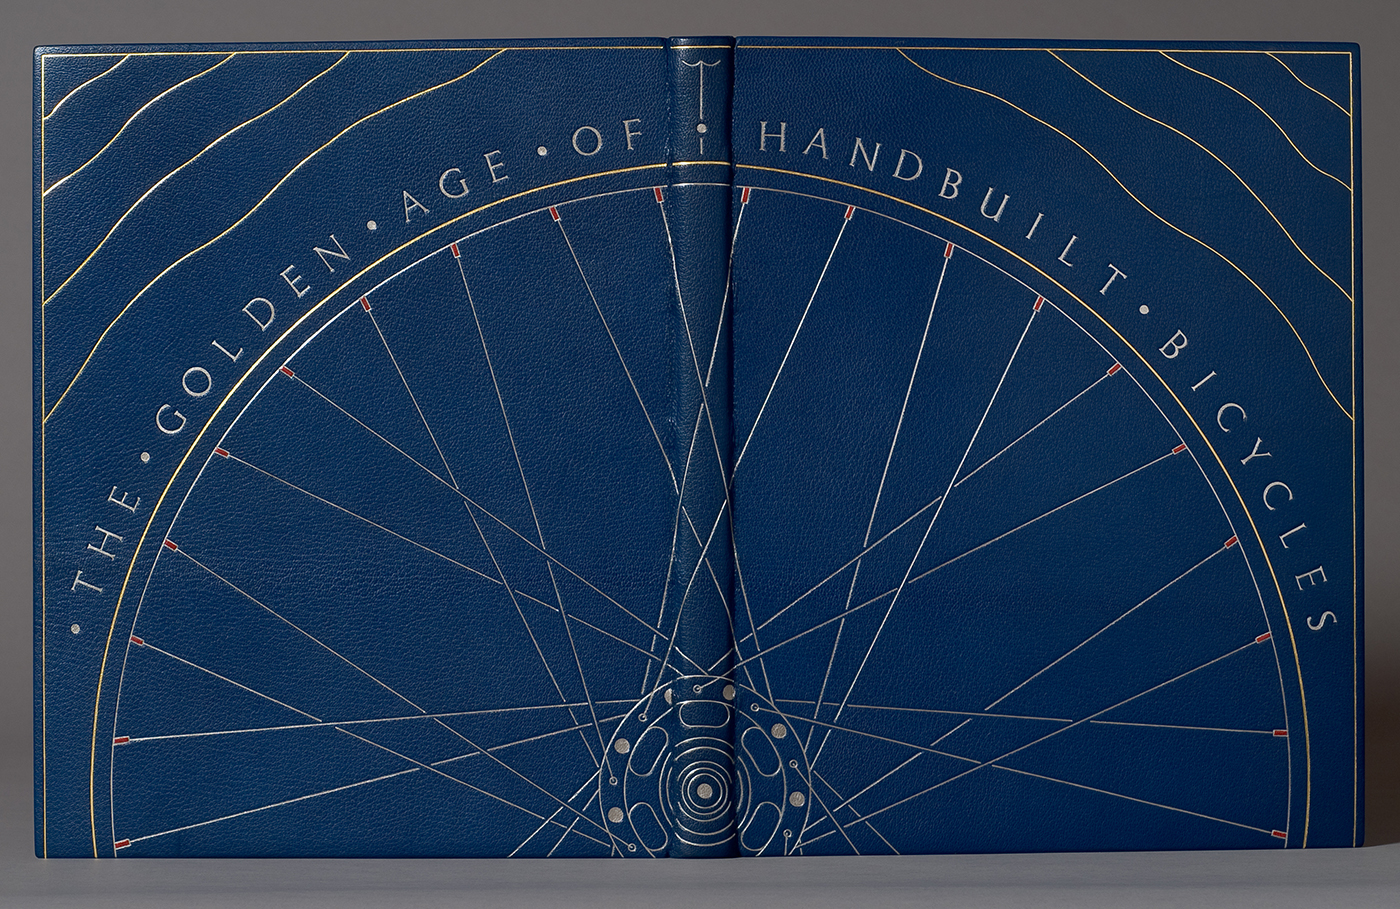 The Golden Age of Handbuilt Bicycles, bound by Mark Esser